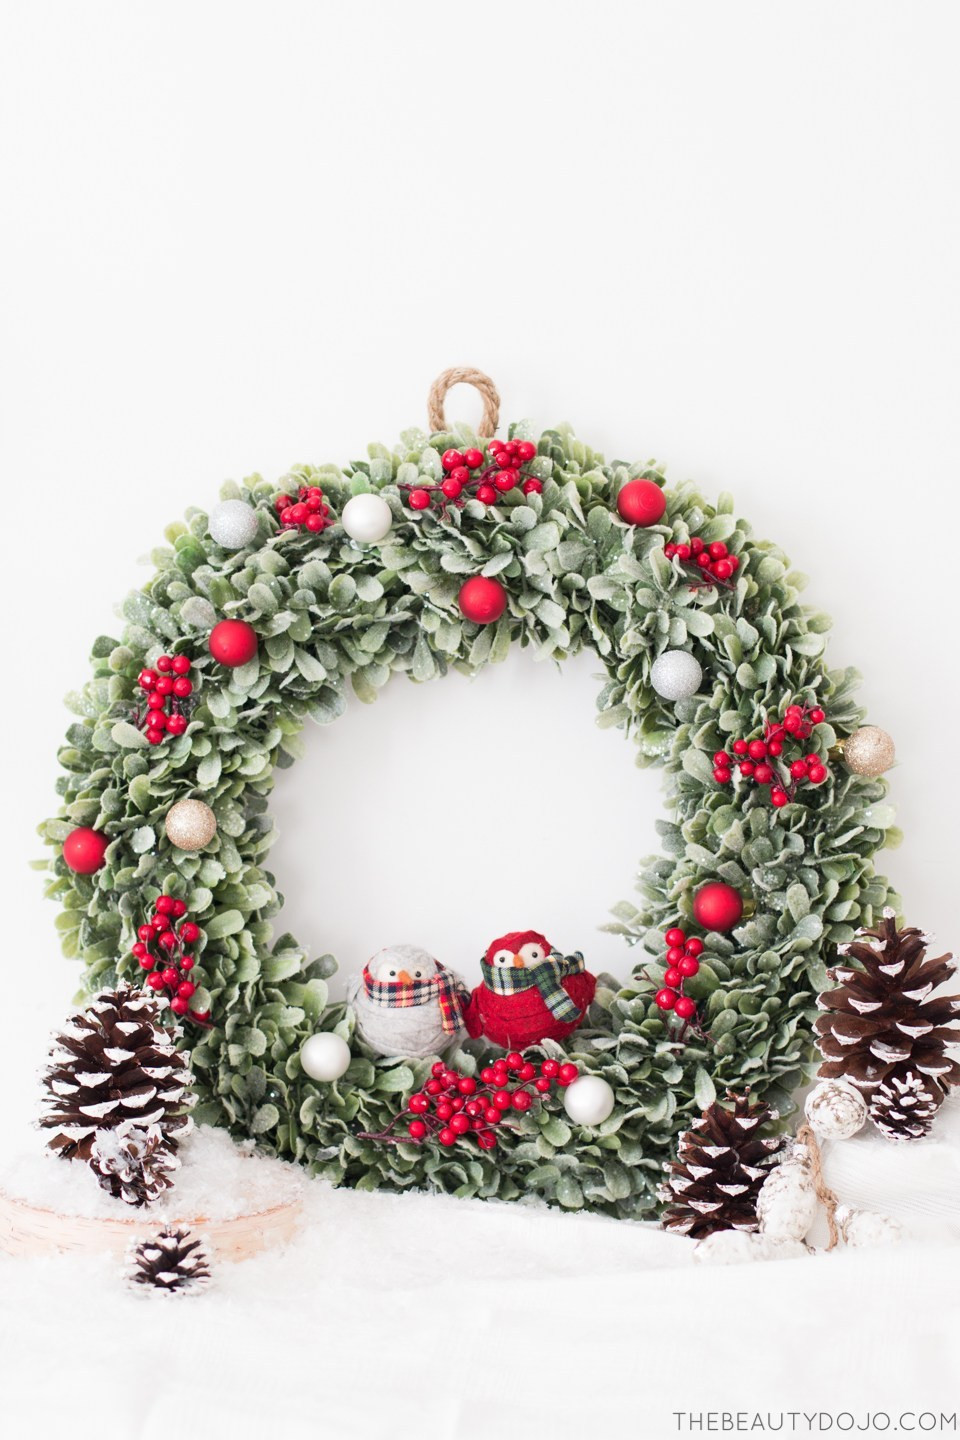 Best ideas about DIY Christmas Wreaths
. Save or Pin DIY Christmas Wreath The Beautydojo Now.